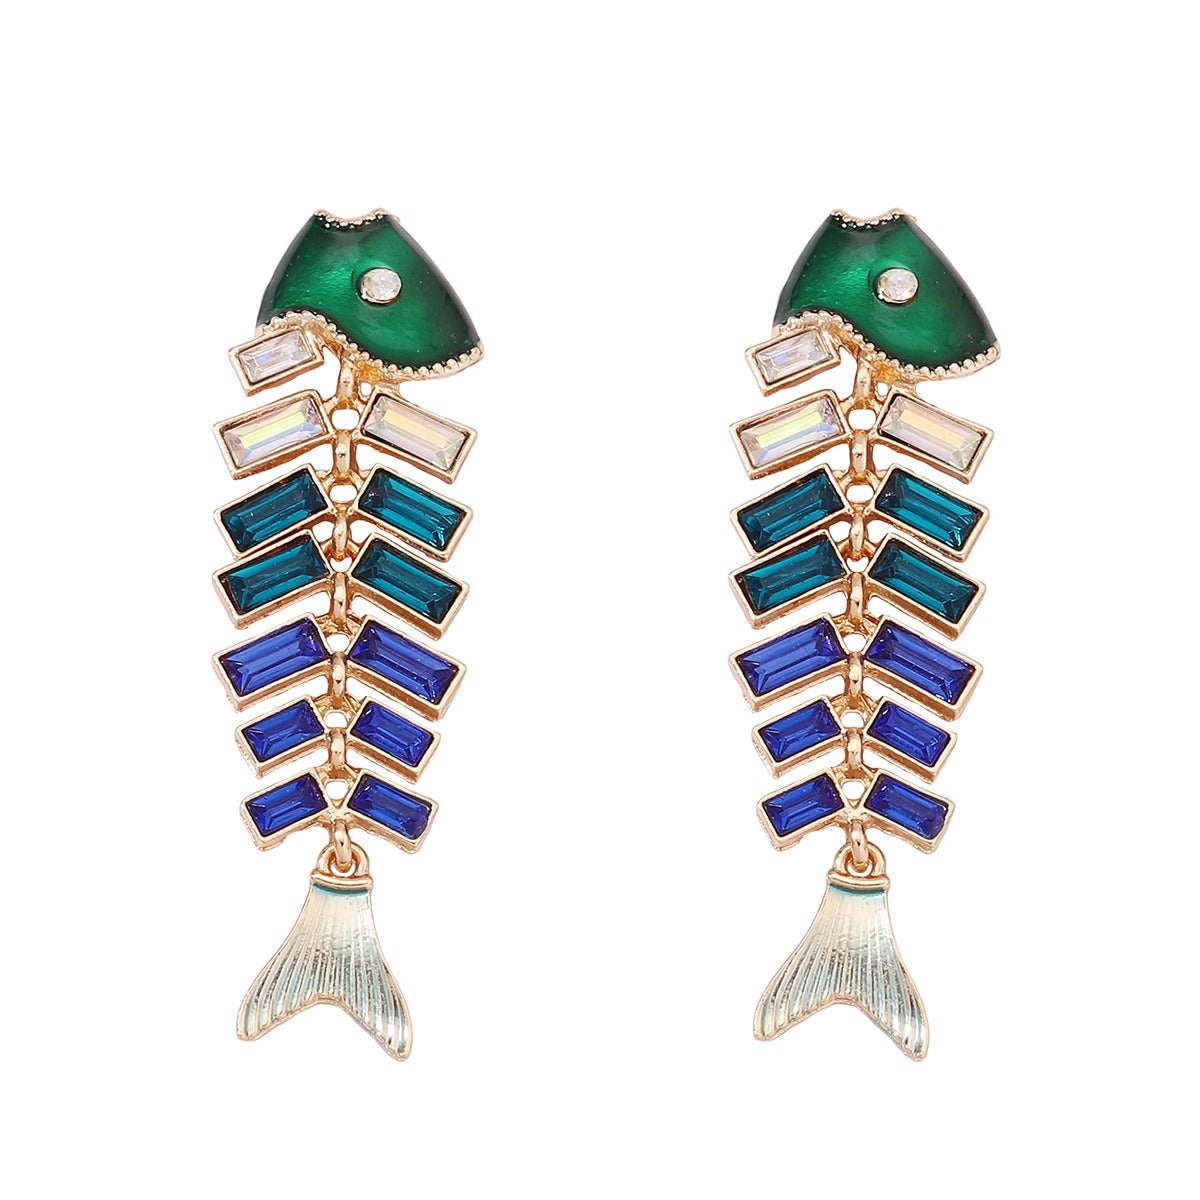 Retro fishbone earrings zinc alloy rhinestone stitching animal earrings for women